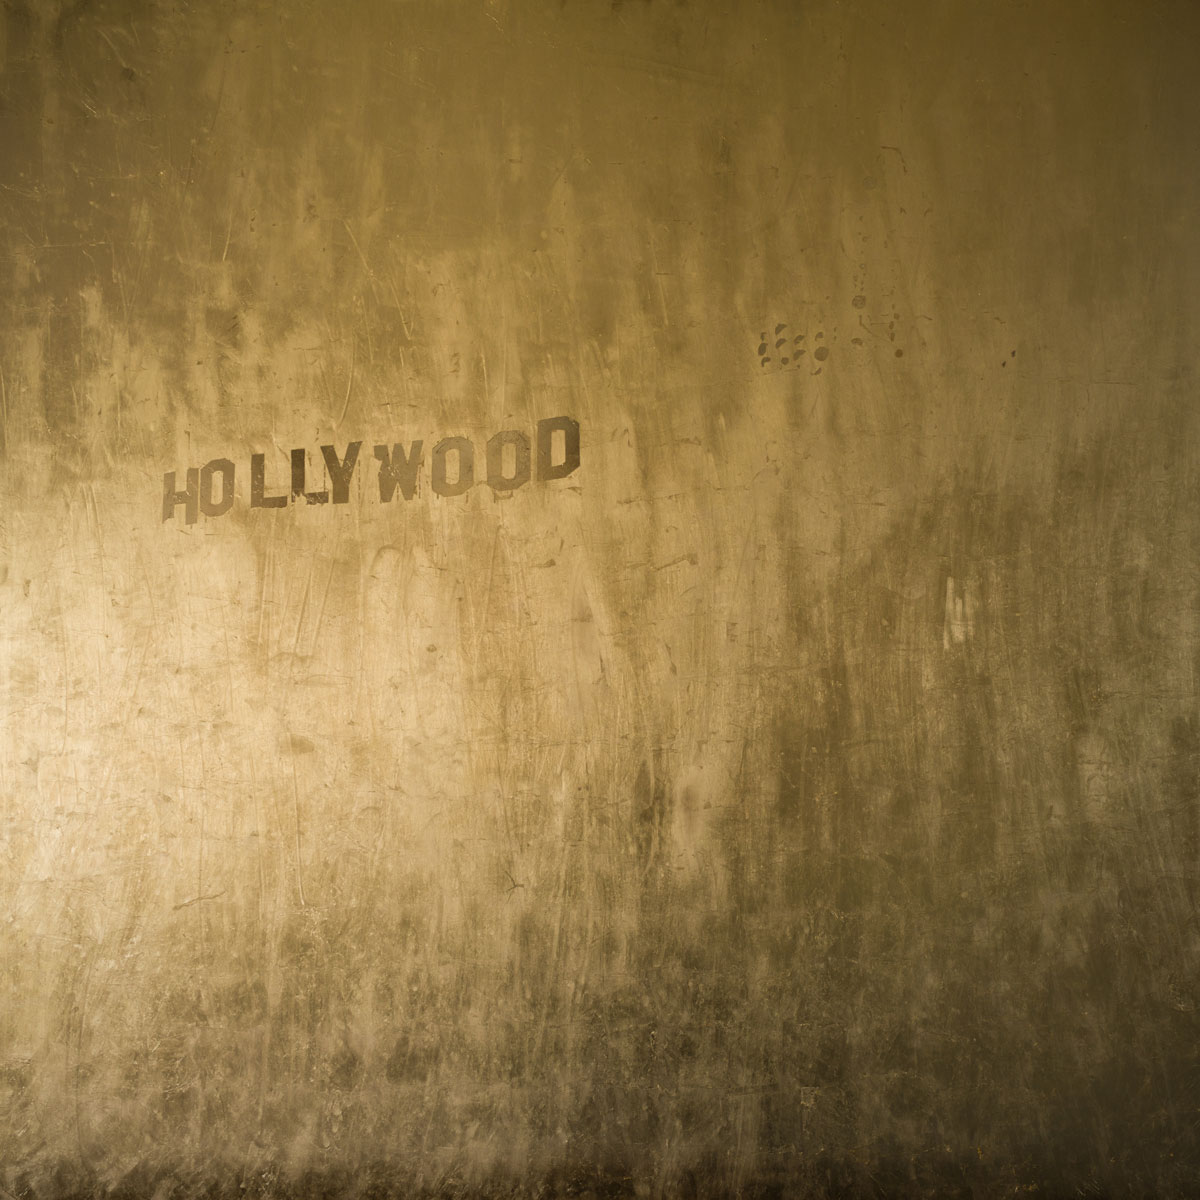 Hollywood, gold on aluminum, 135x135cm, 2018